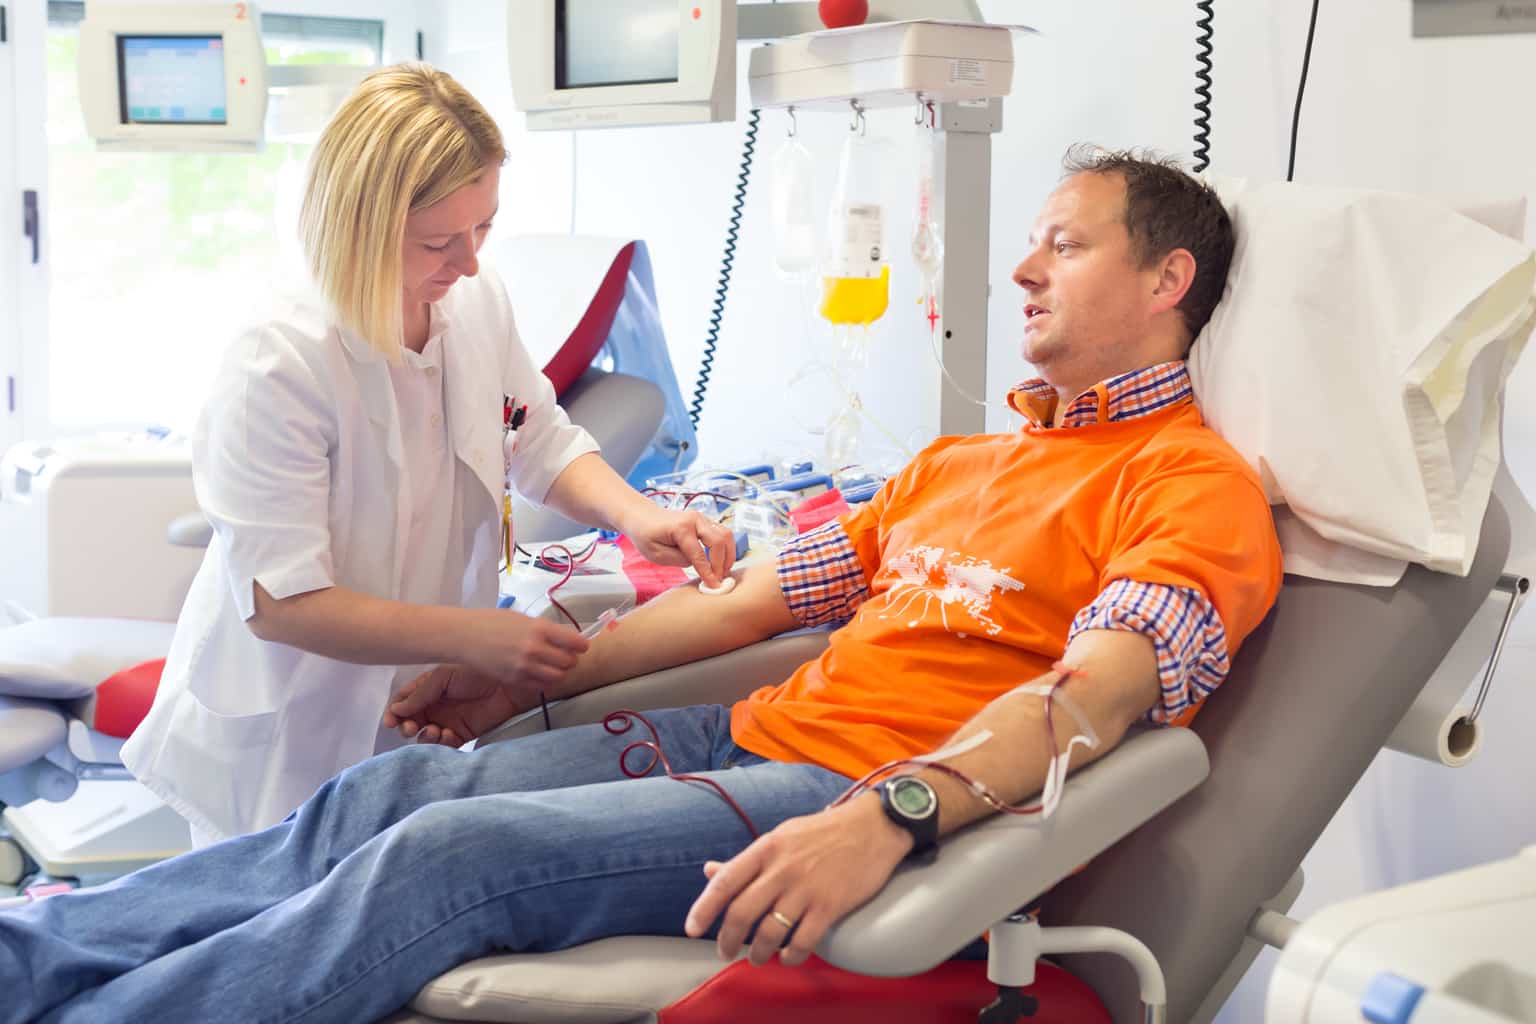 Can blood donation improve insulin sensitivity?